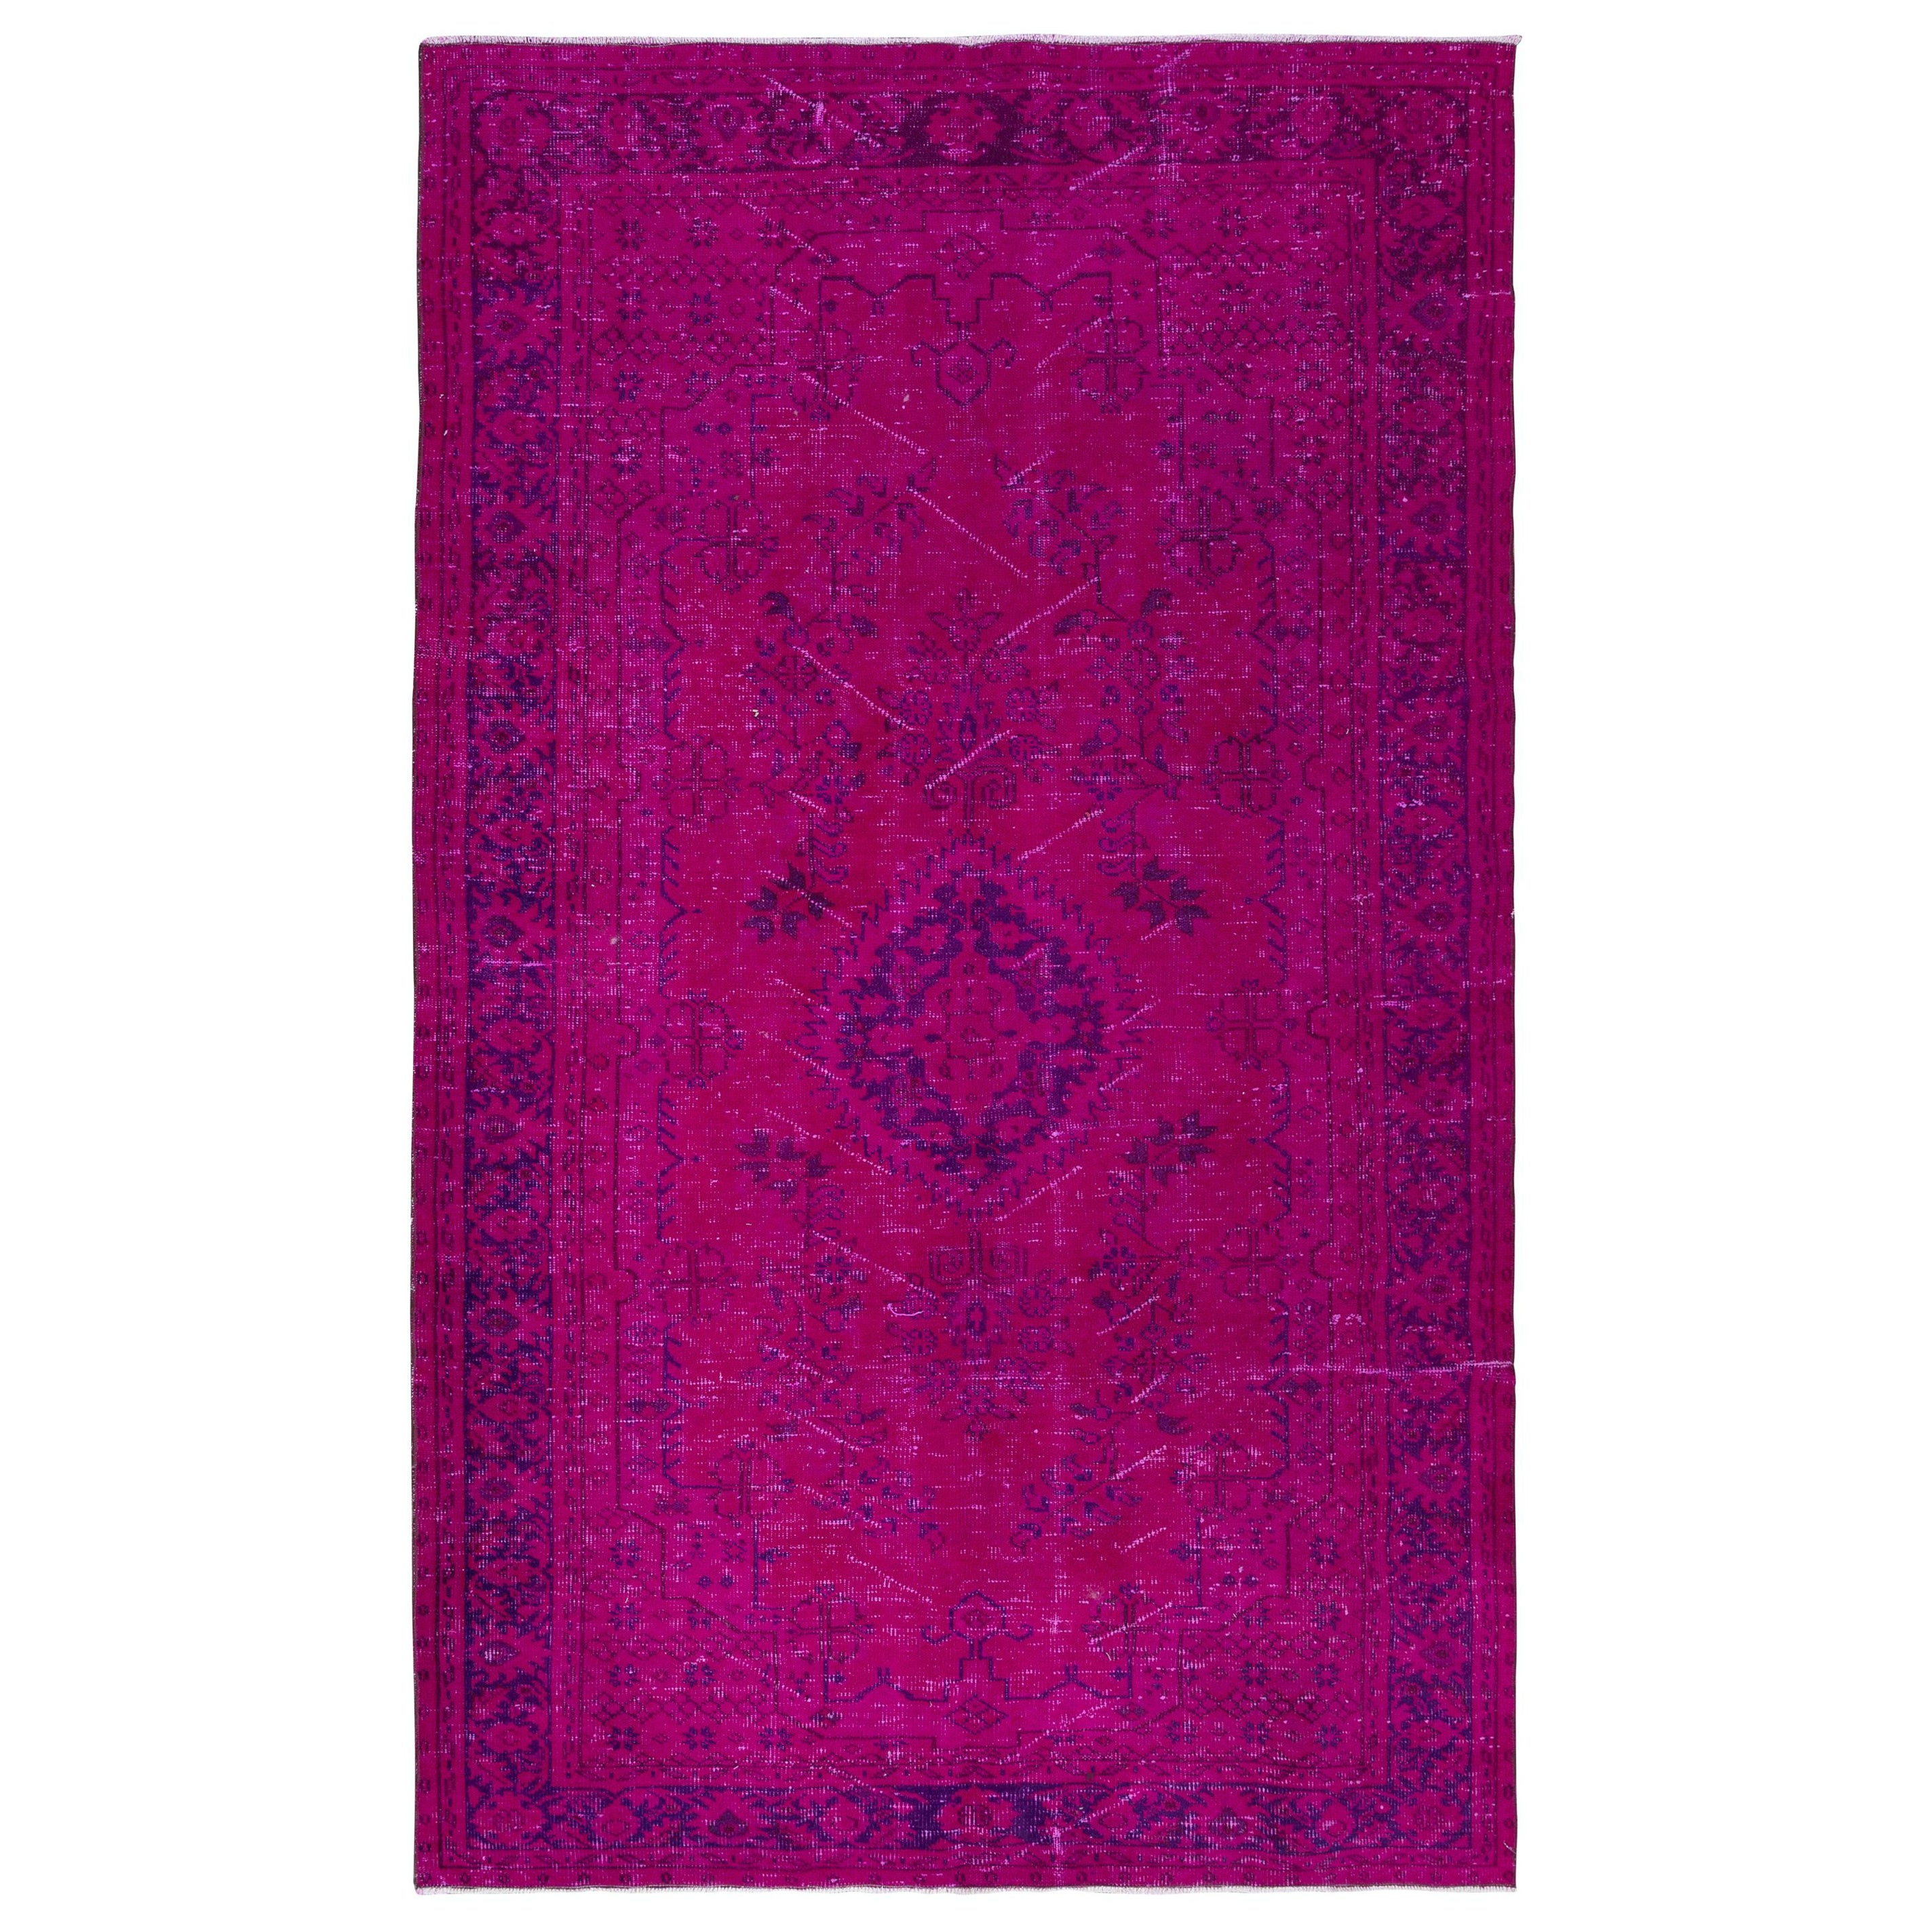 6x9.8 Ft Contemporary Pink Area Rug, Handmade in Turkey, Living Room Carpet (tapis de salon)